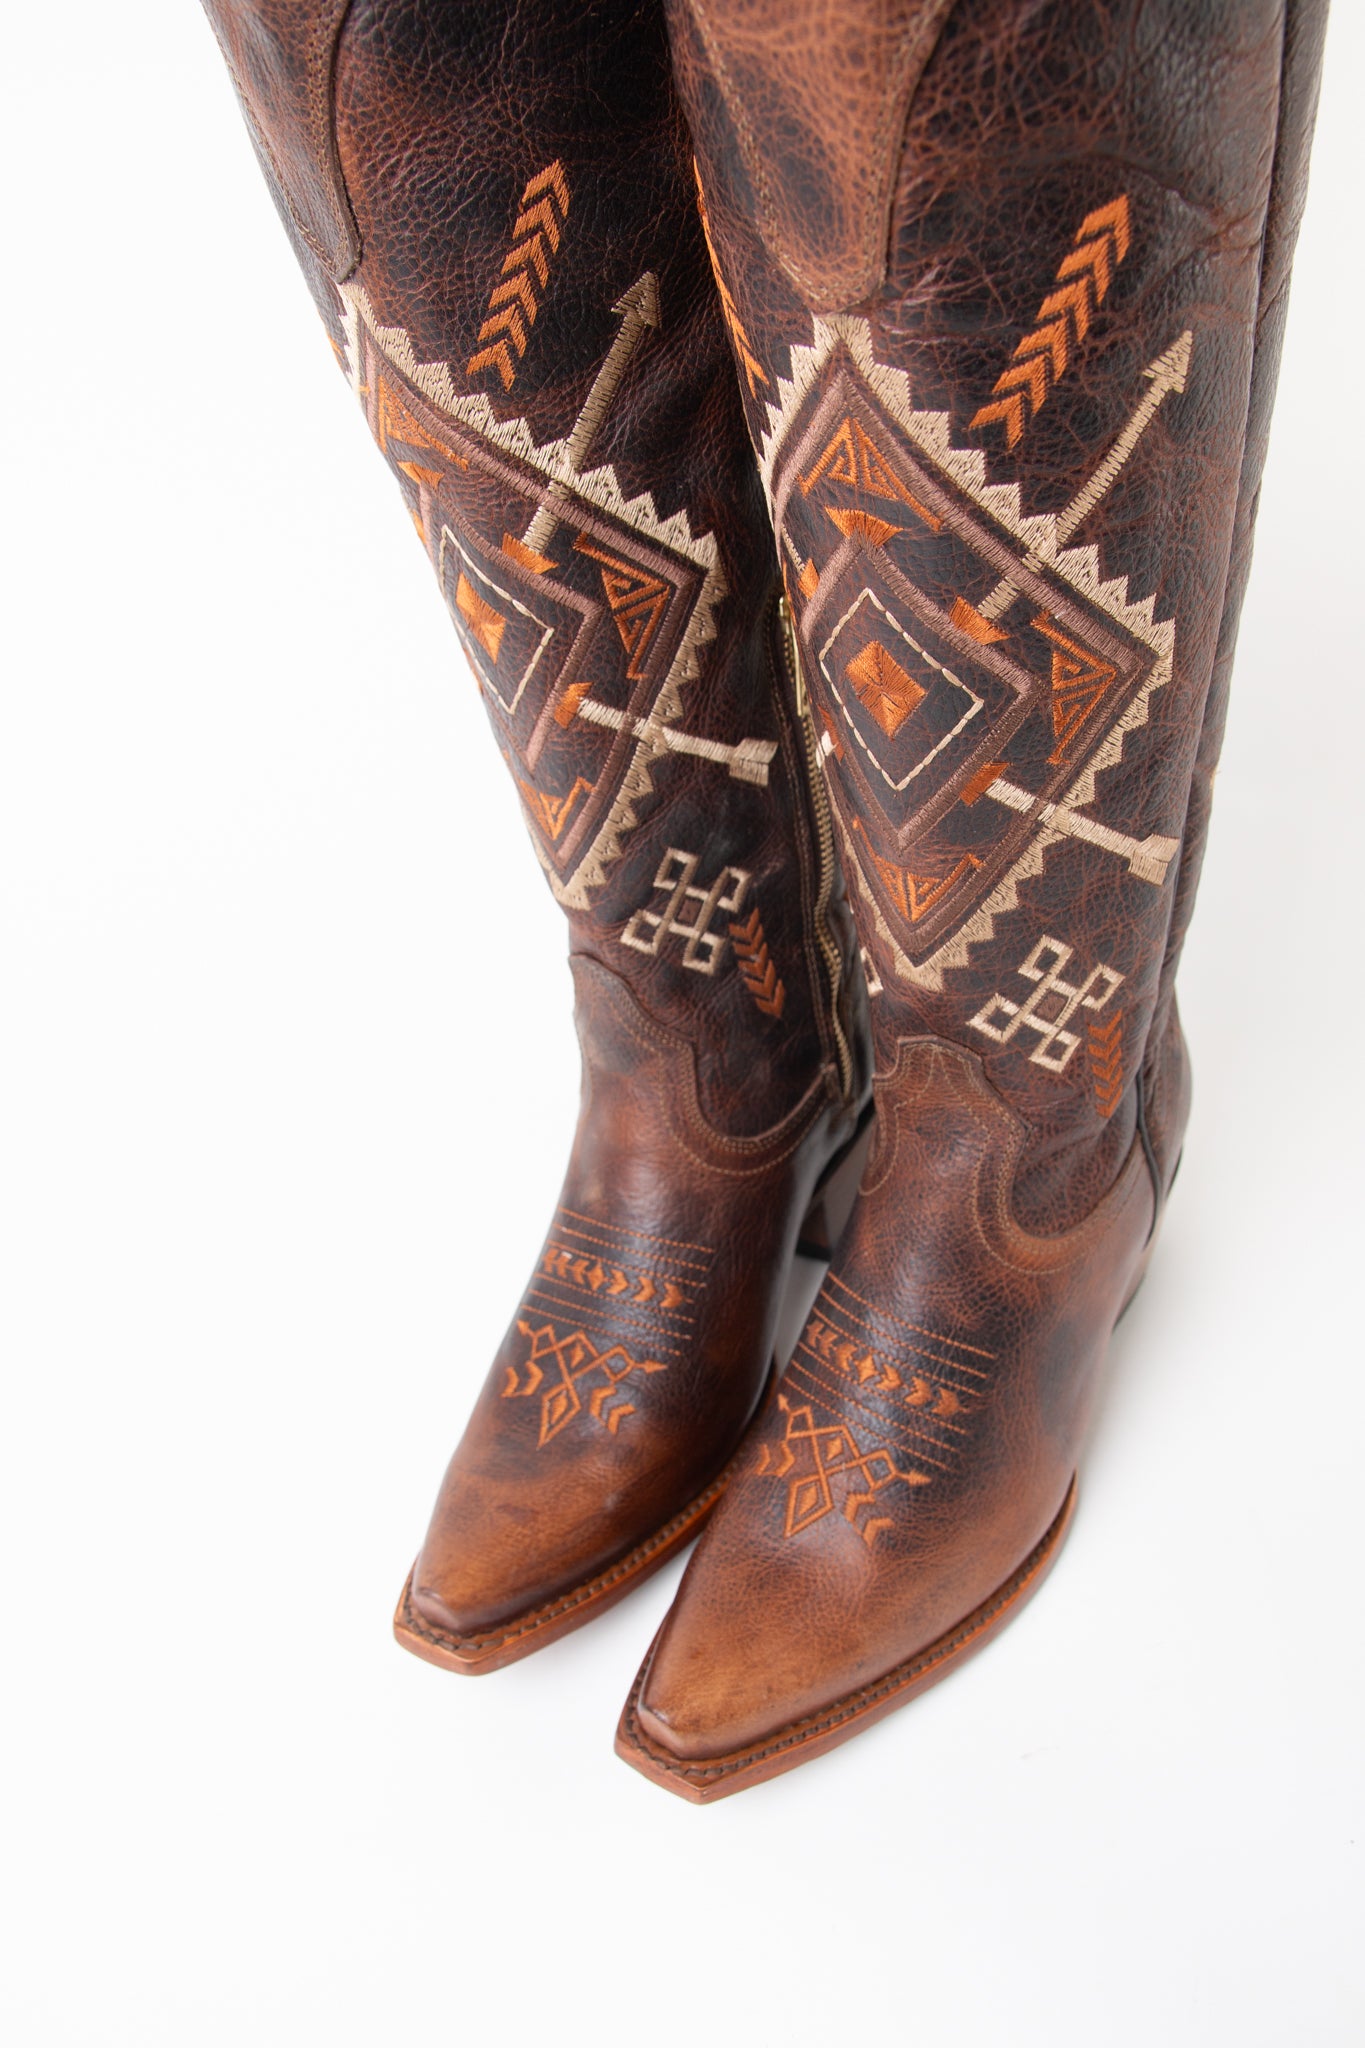 Itzel Arona XL Point Toe Cowgirl Boots